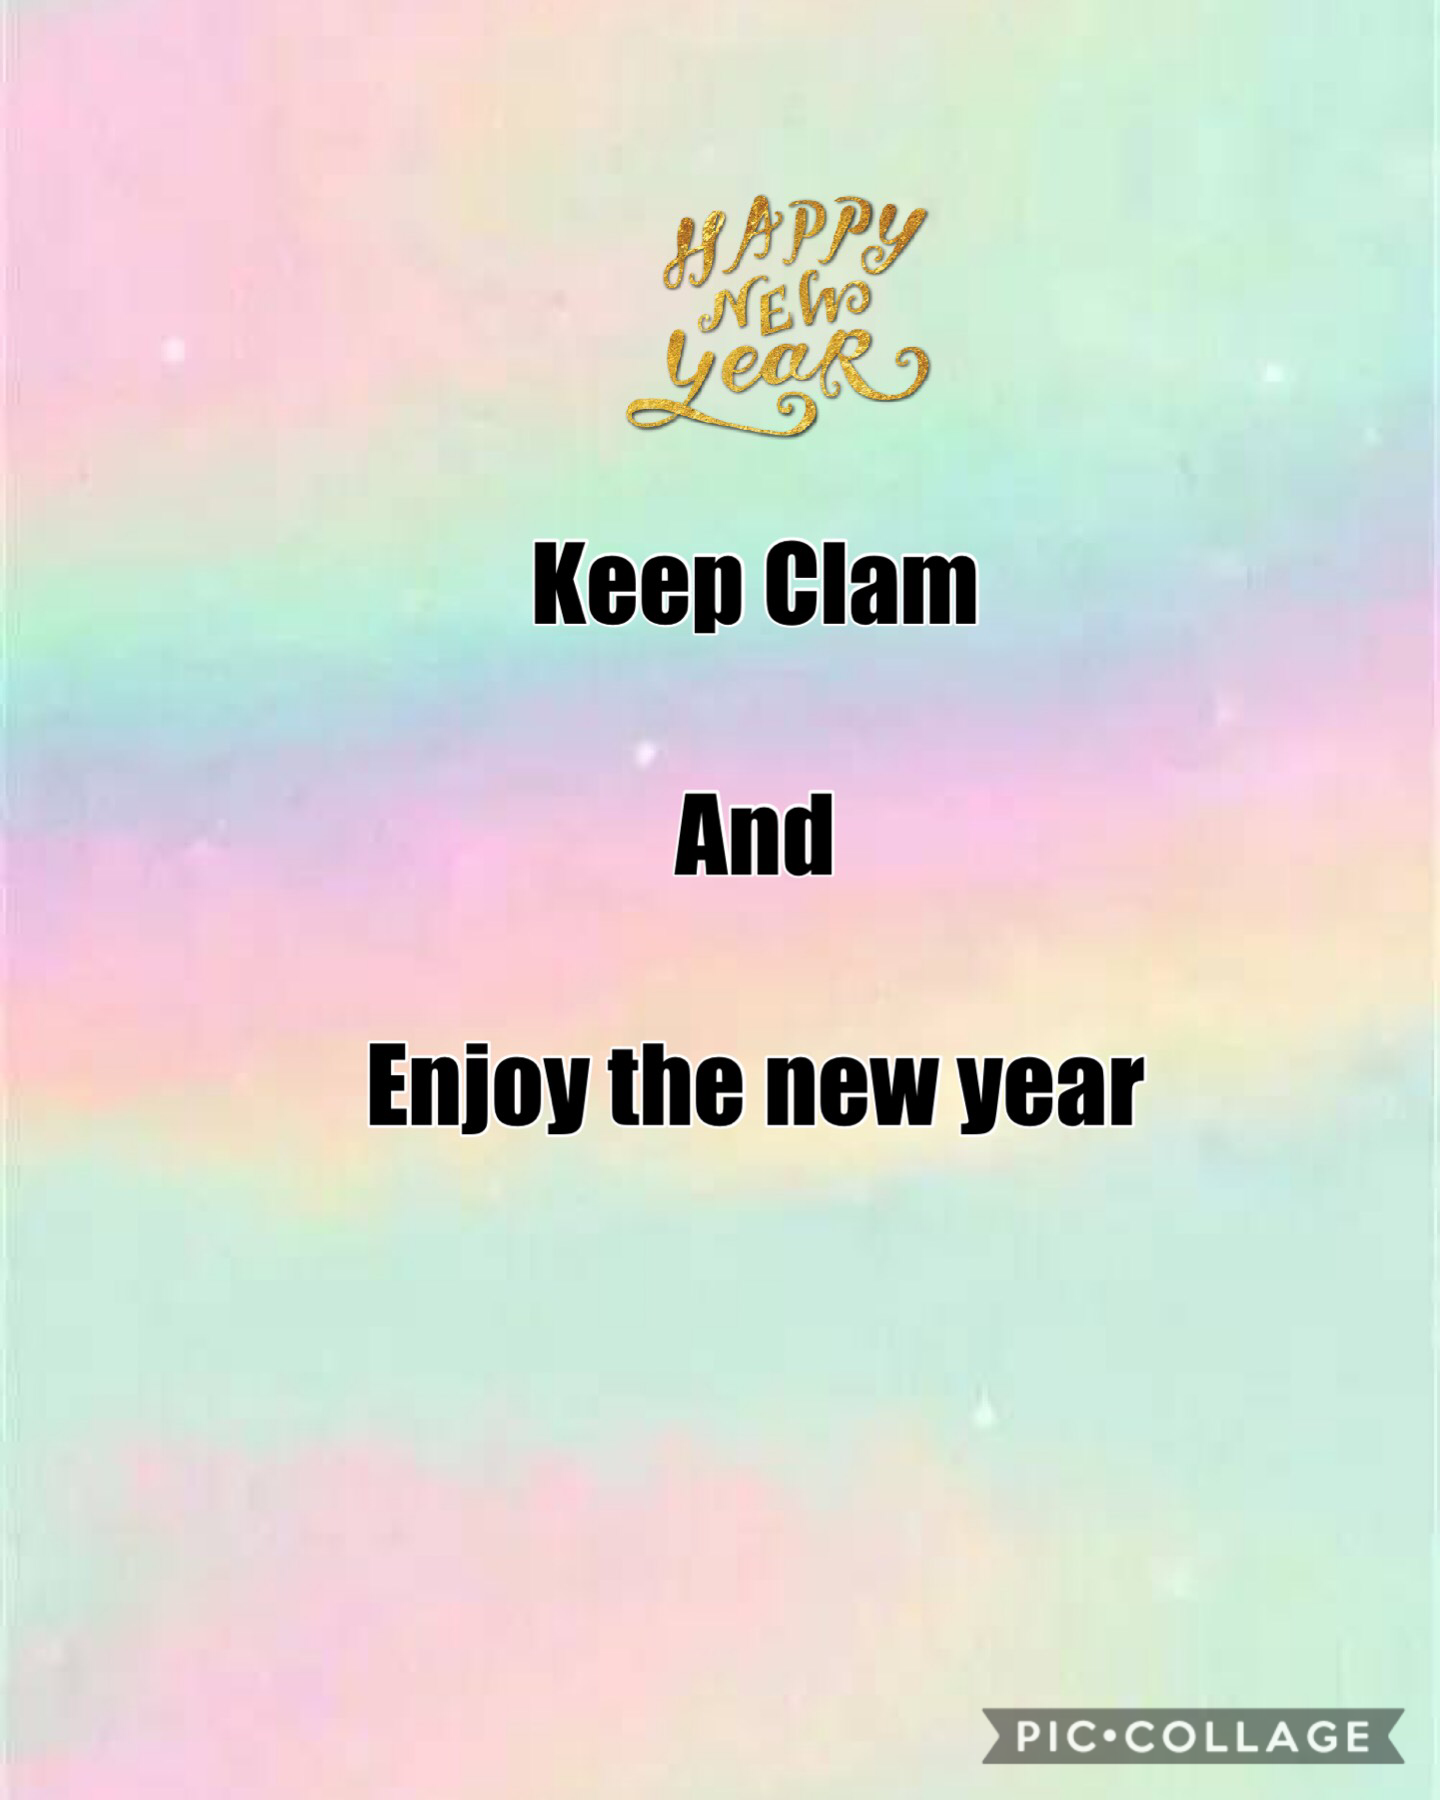 Happy new year!